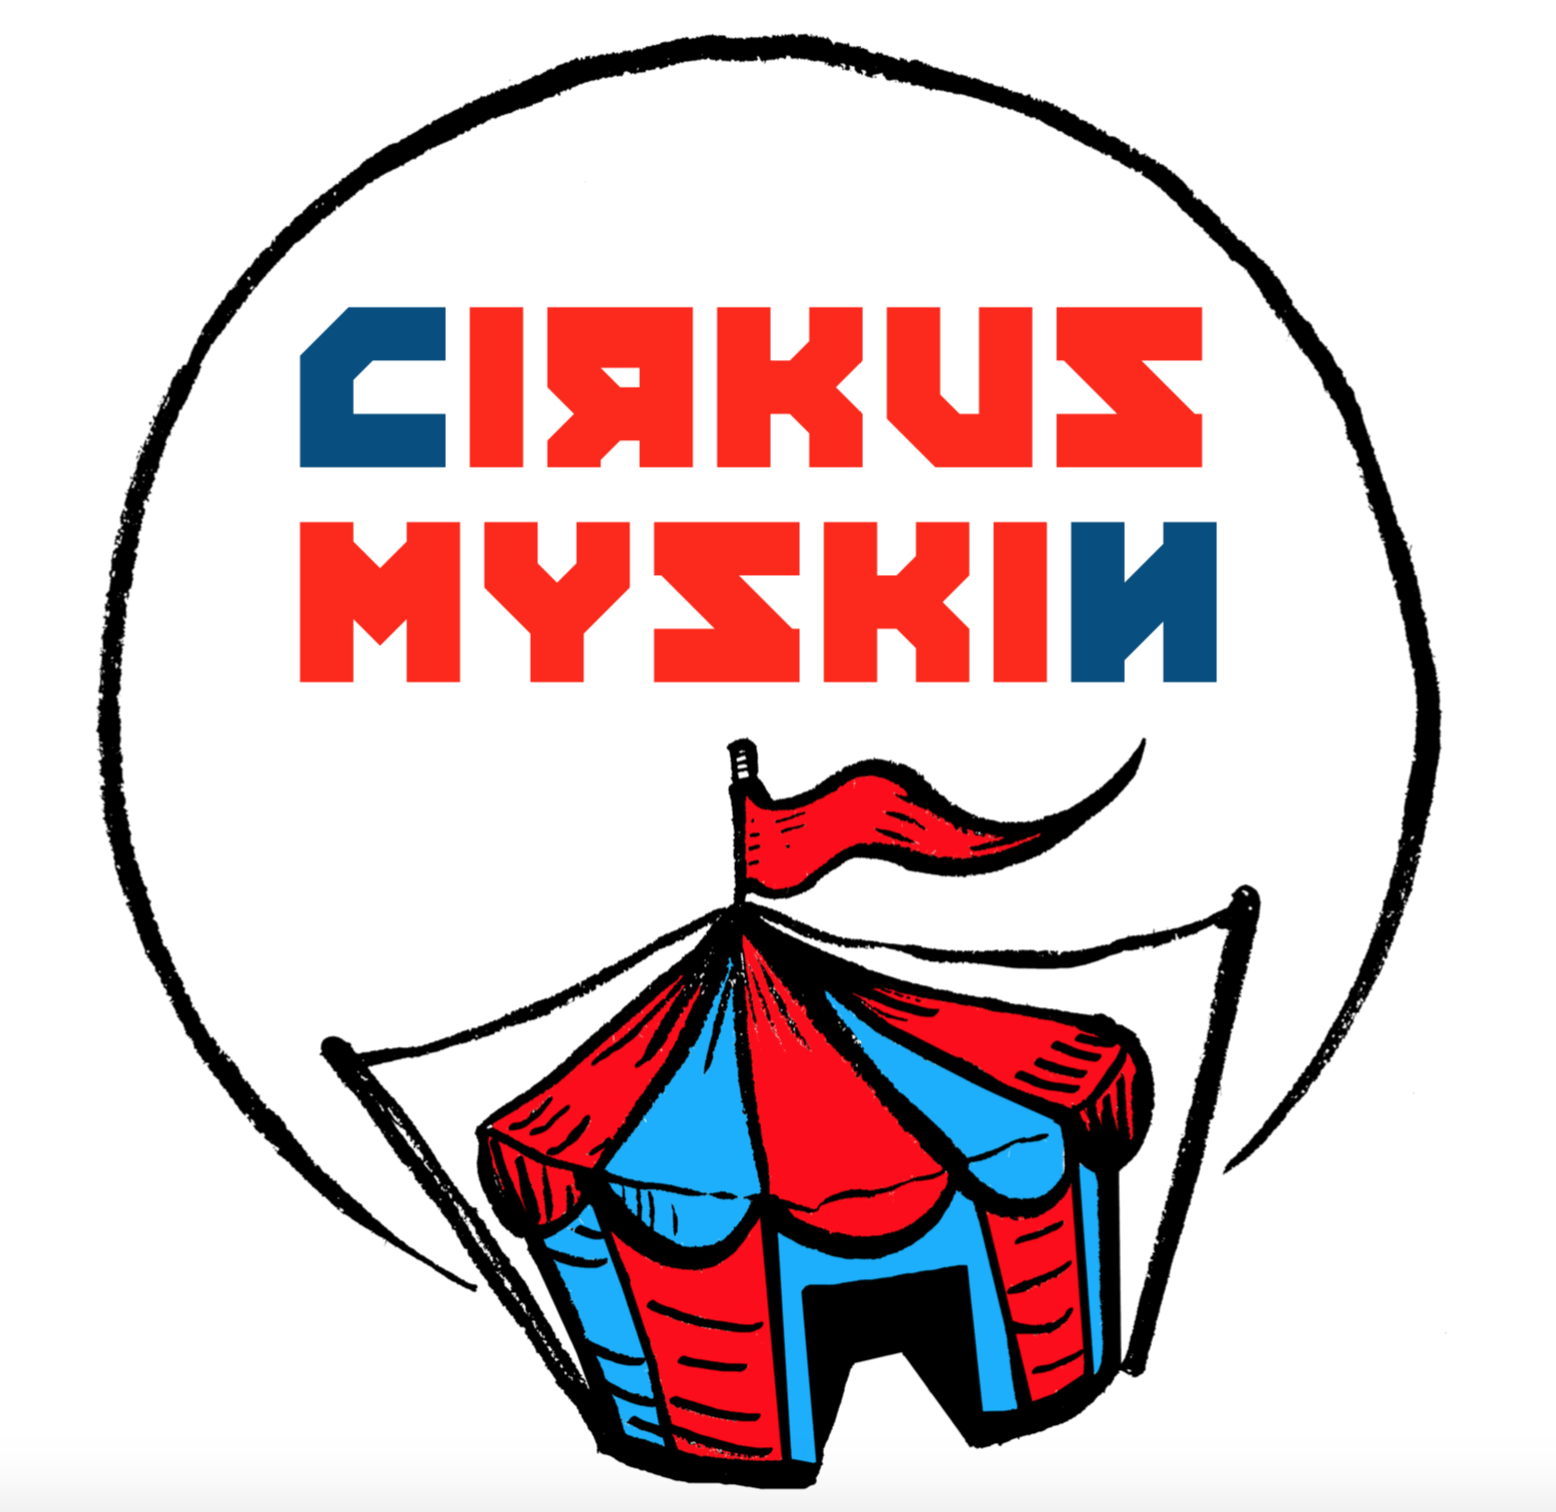 Cirkus Myskin logo